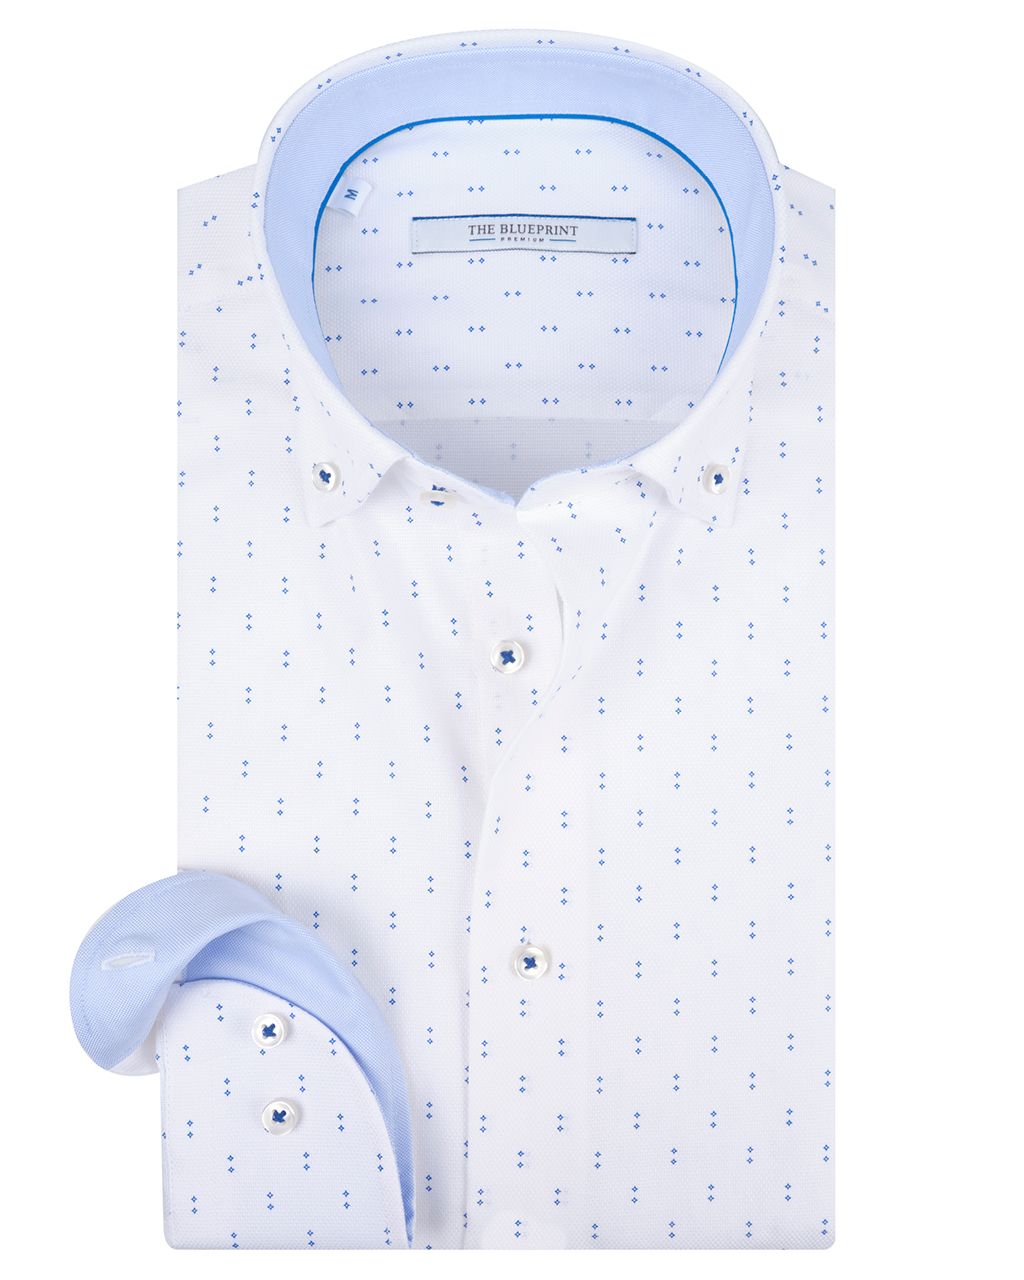 The BLUEPRINT Premium Trendy Overhemd LM Wit dessin 078406-001-L